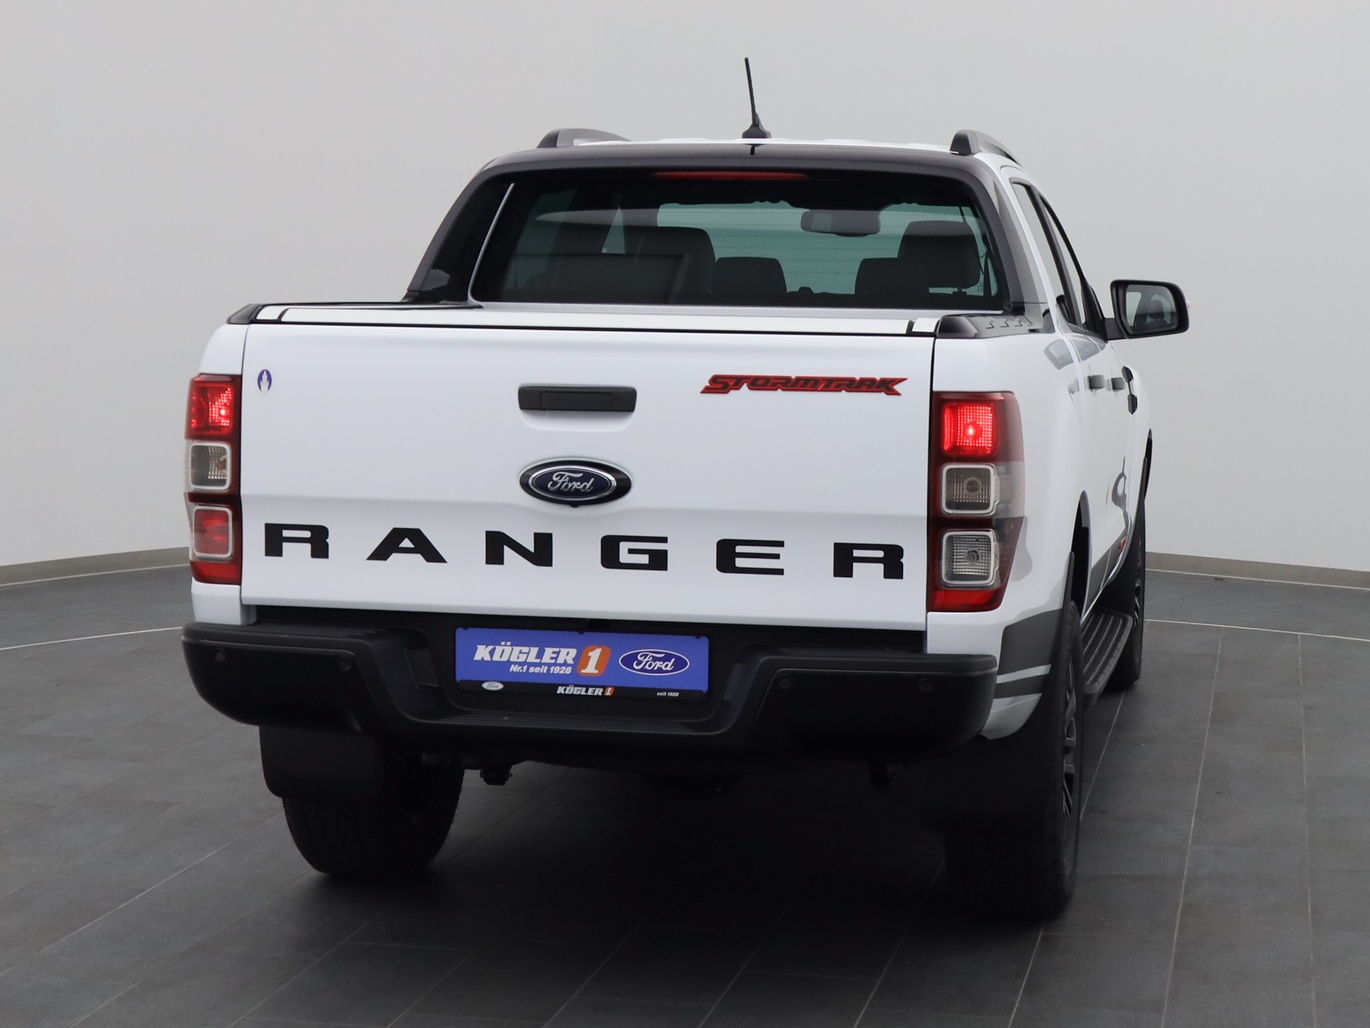  Ford Ranger DoKa Stormtrak 213PS / PDC / Klima in Weiss 